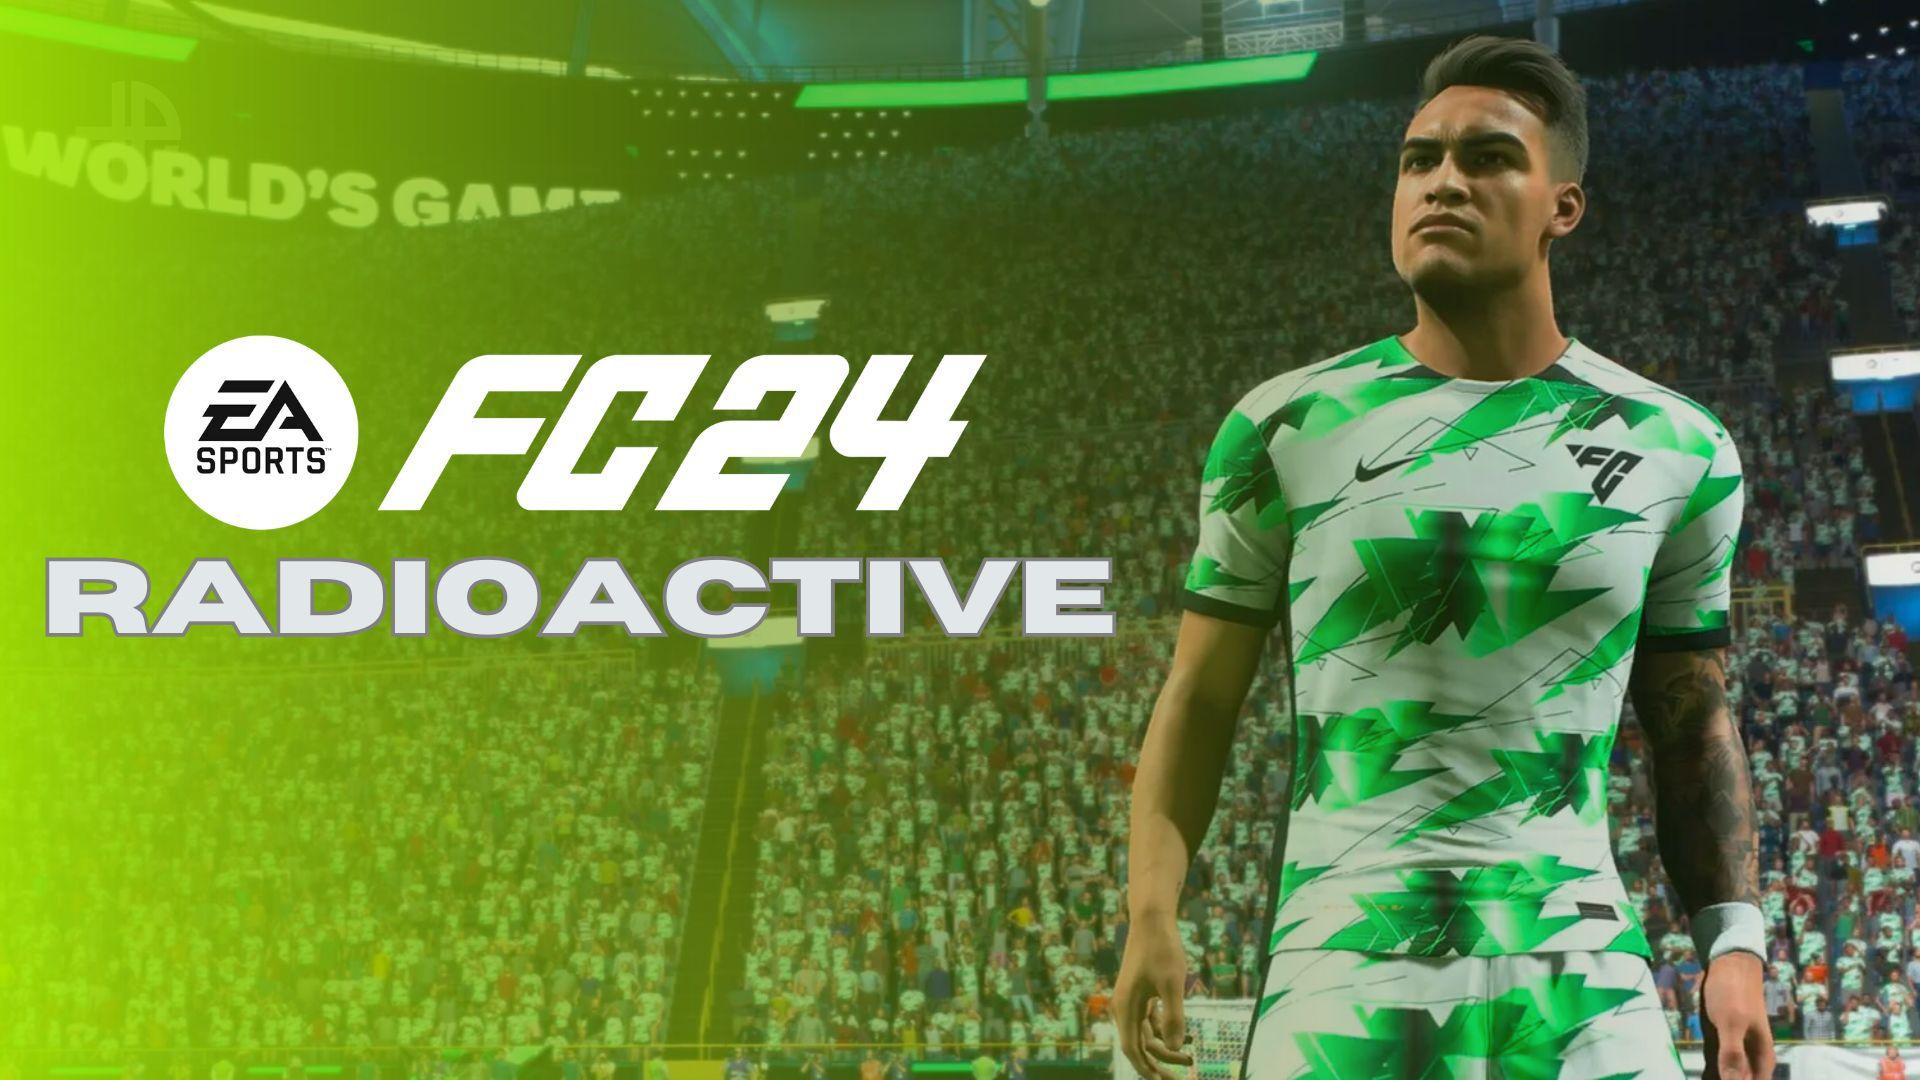 Radioactive text and EA SPORTS FC 24 logo next to Lautaro Martinez